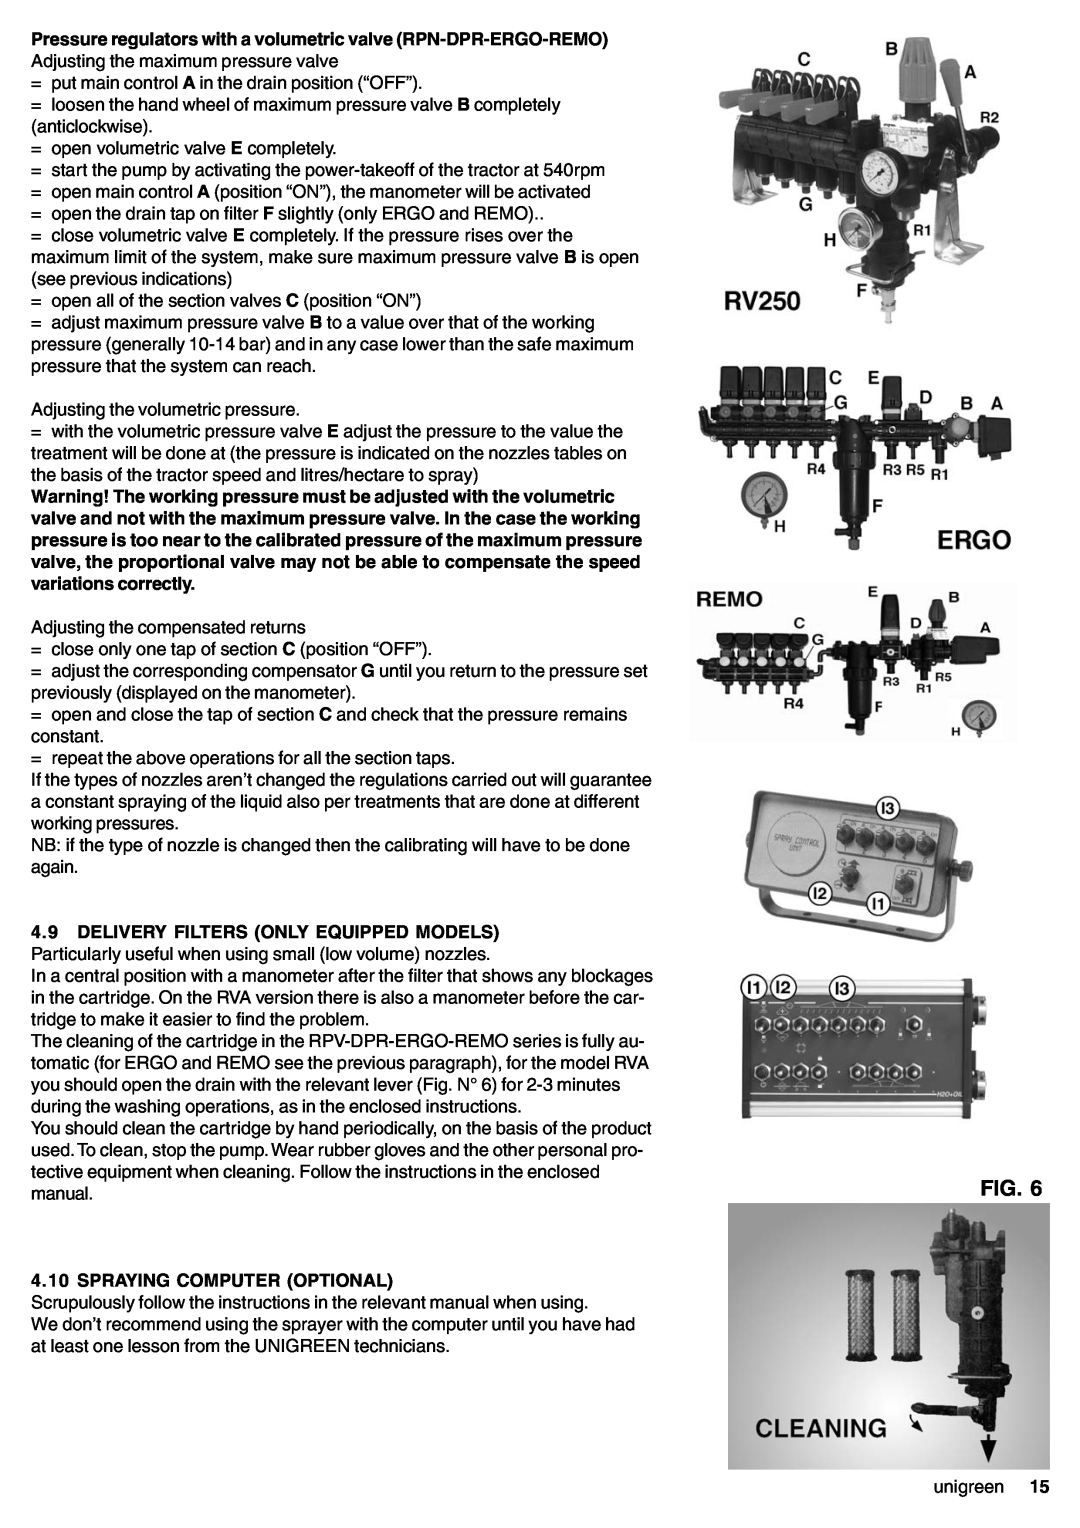 Unigreen 32, 22, 16, 11 manual Spraying Computer Optional 